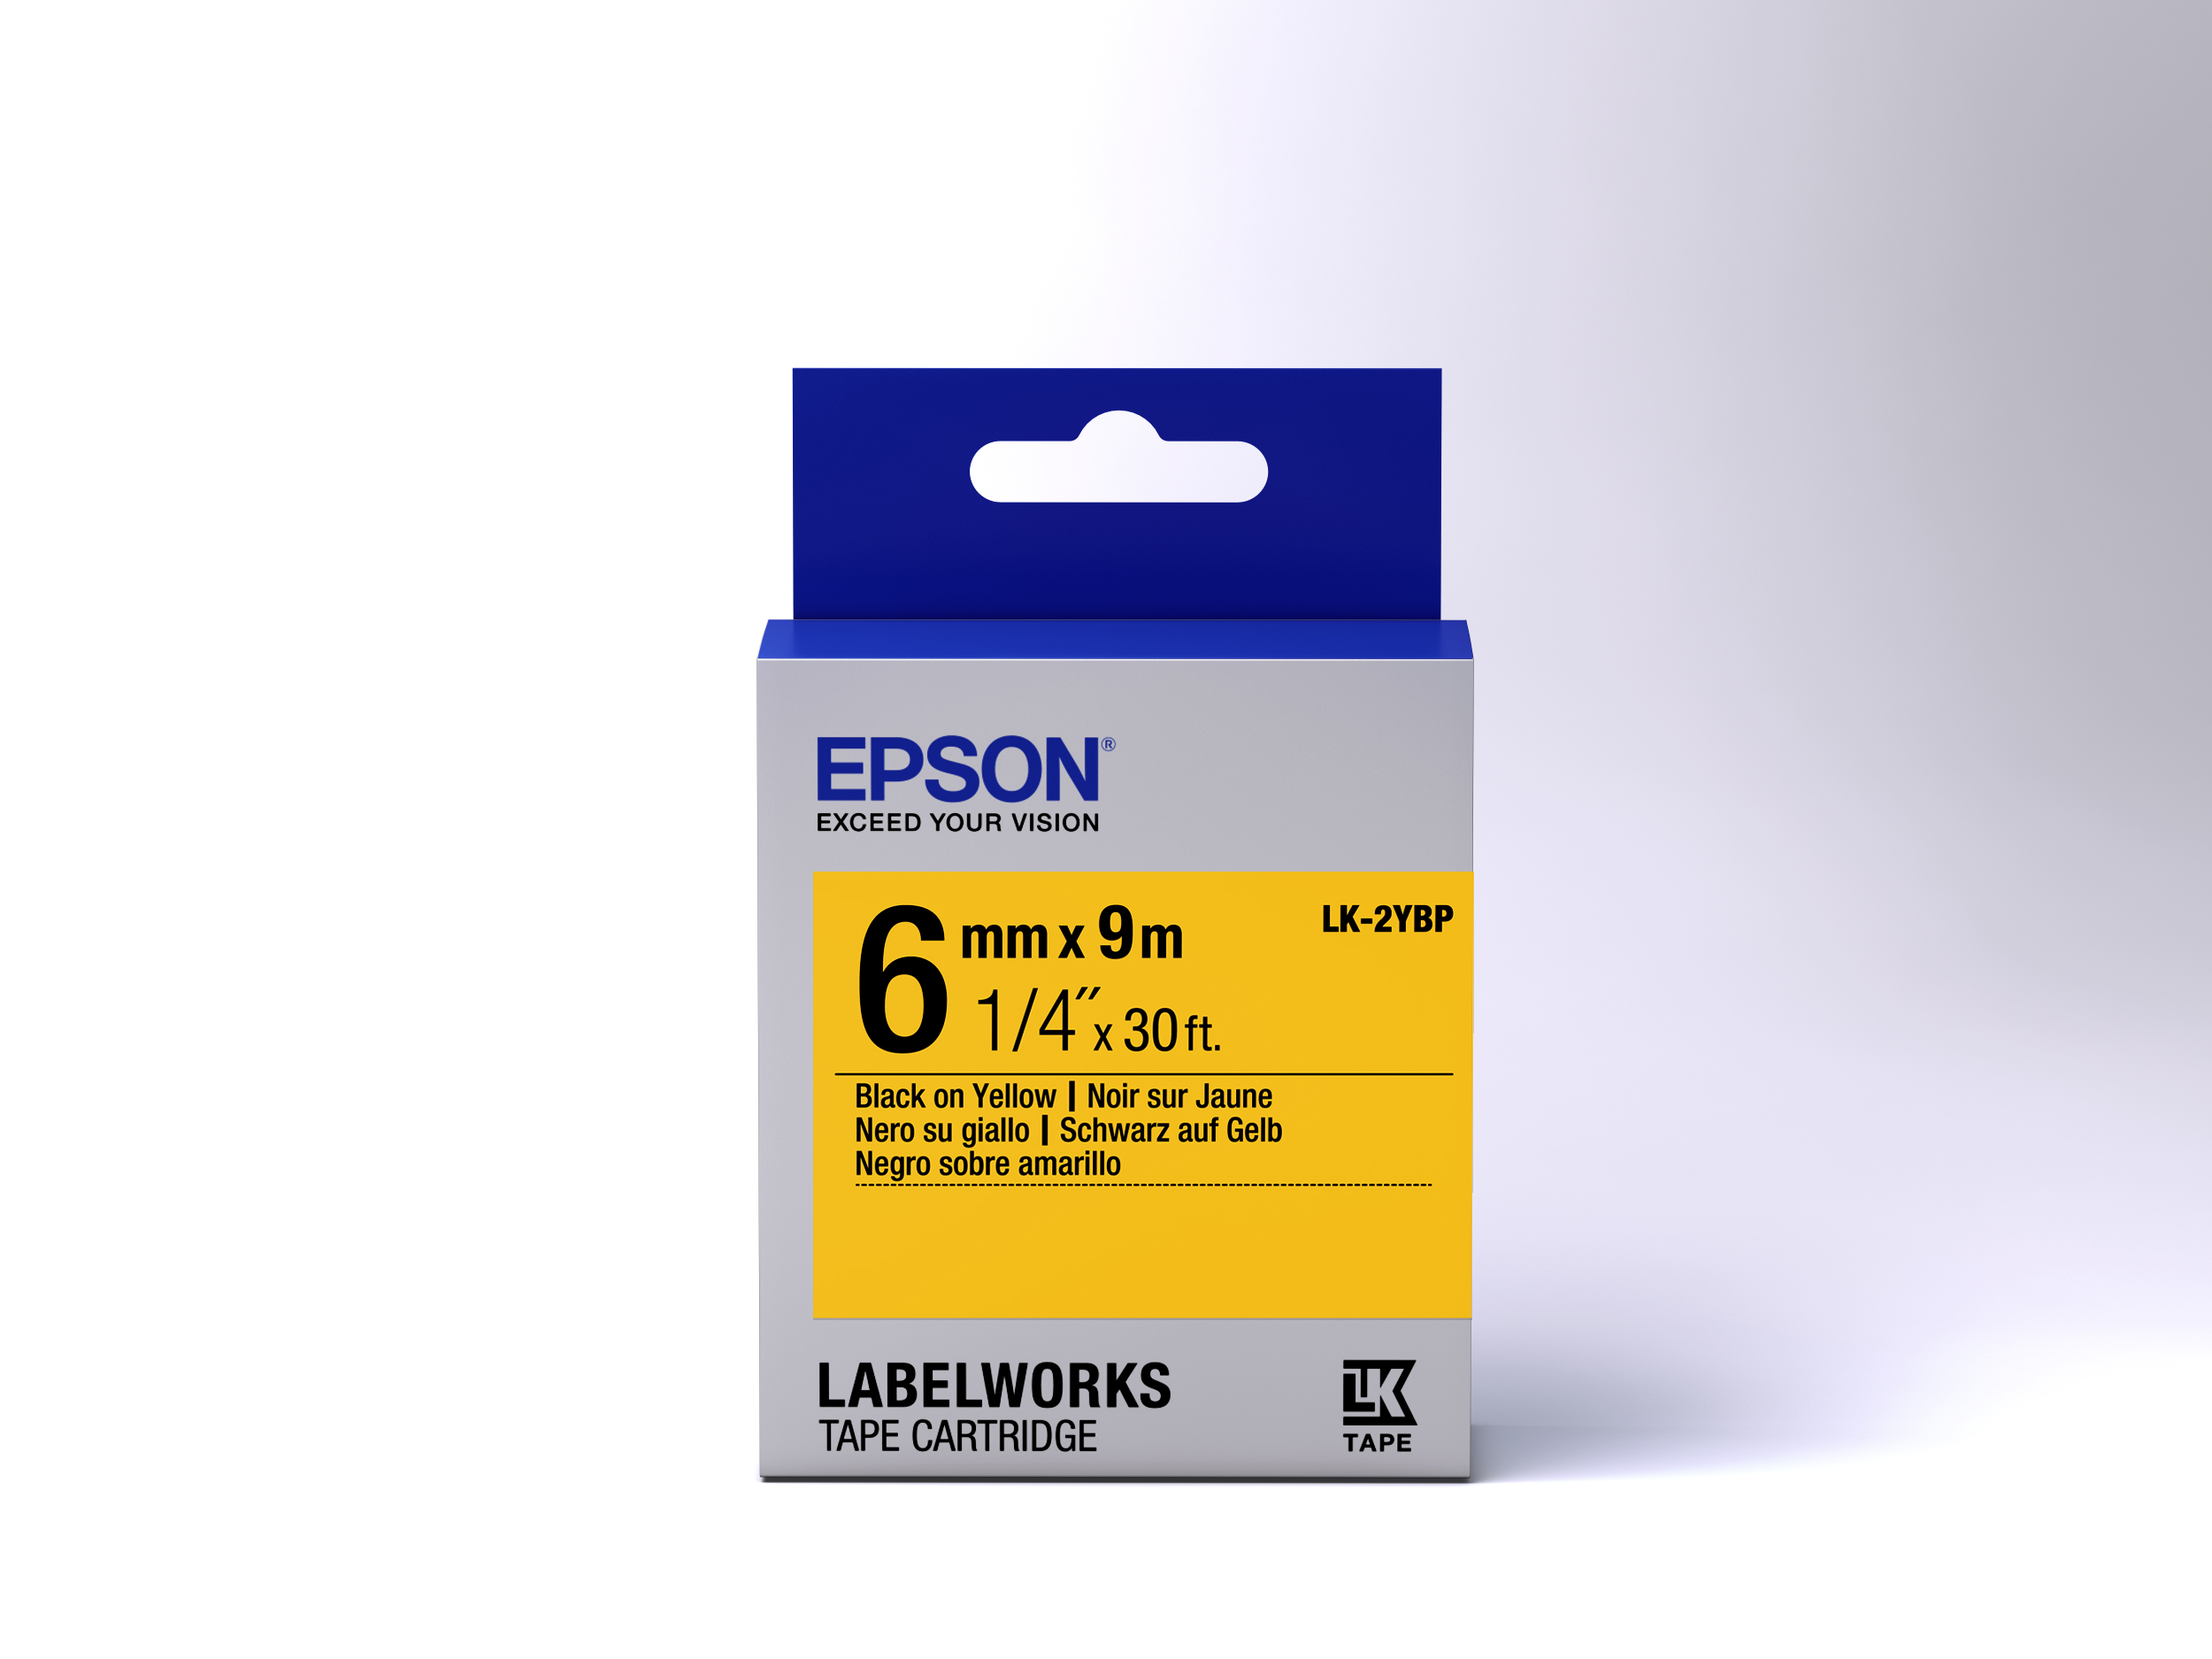 EPSON Paper Label LK-2YBP